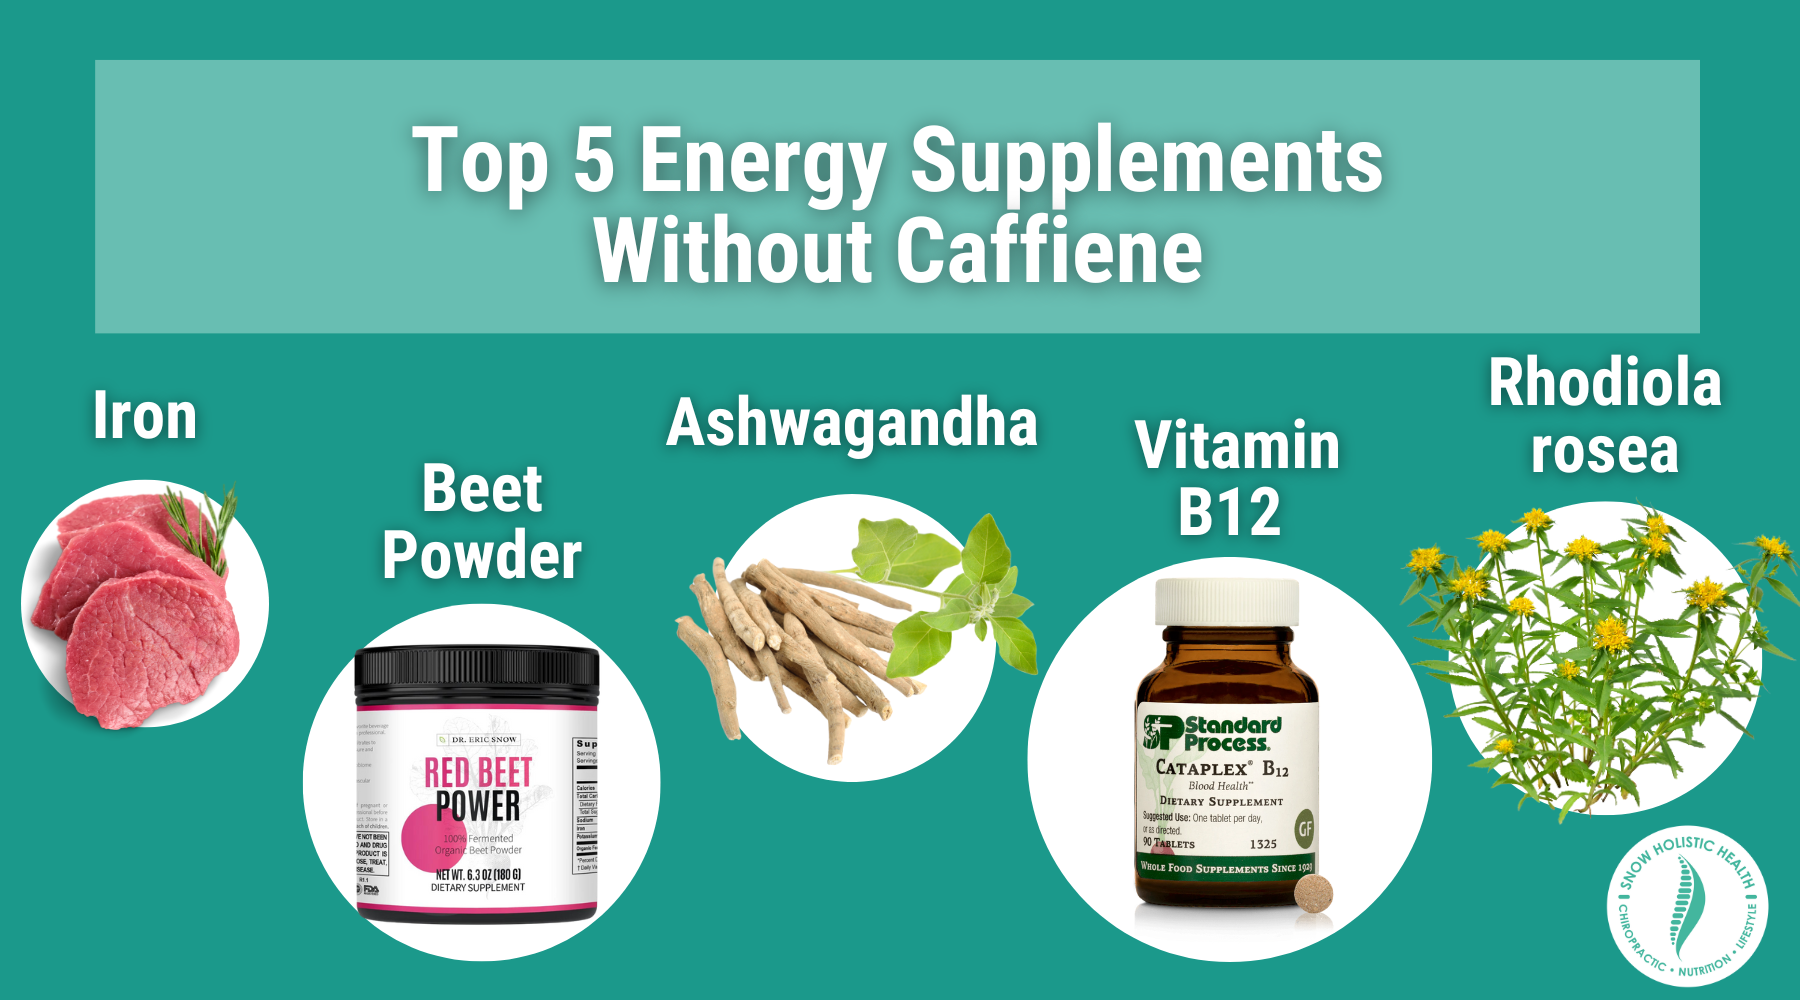 top five energy supplements without caffeine iron beet powder ashwagandha vitamin b12 standard process cataplex b12 rhodiola rosea